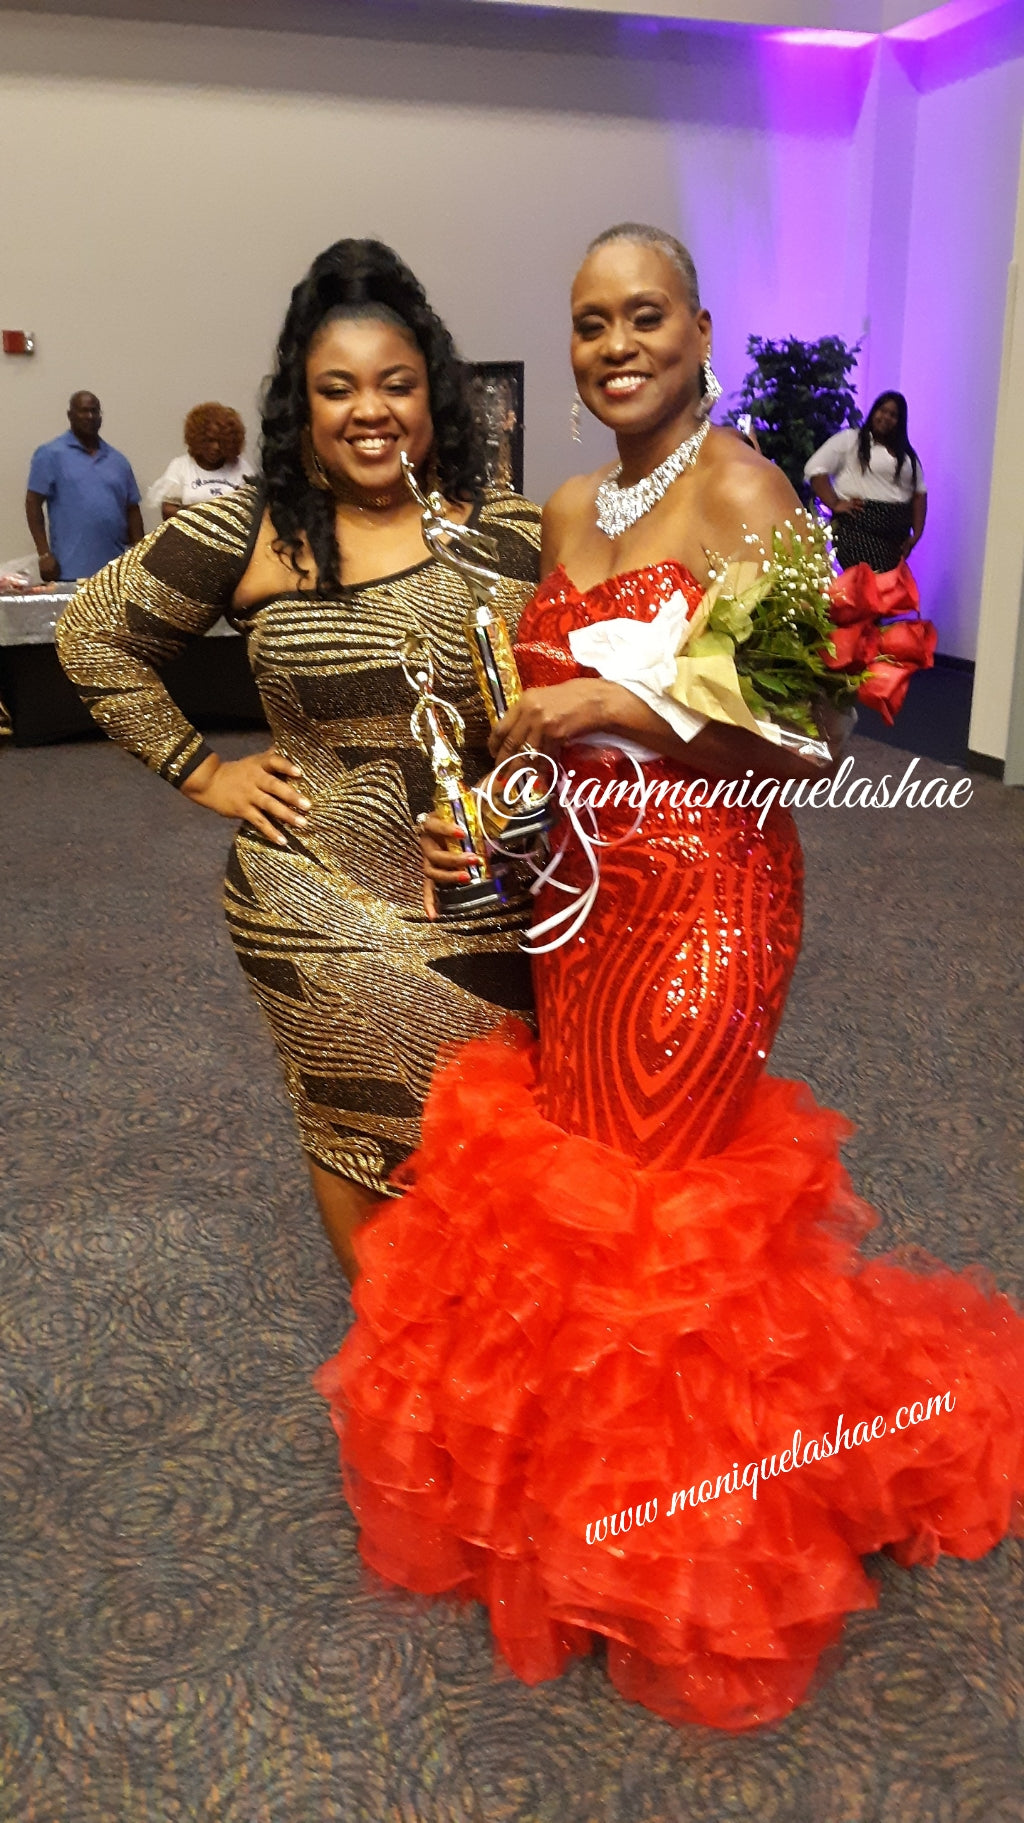 A Seasonded Affair Miss Senior Jacksonville 2019 Monique LaShae & Client/Pageant Contestant 1st Runner Up Lolita D. Miller